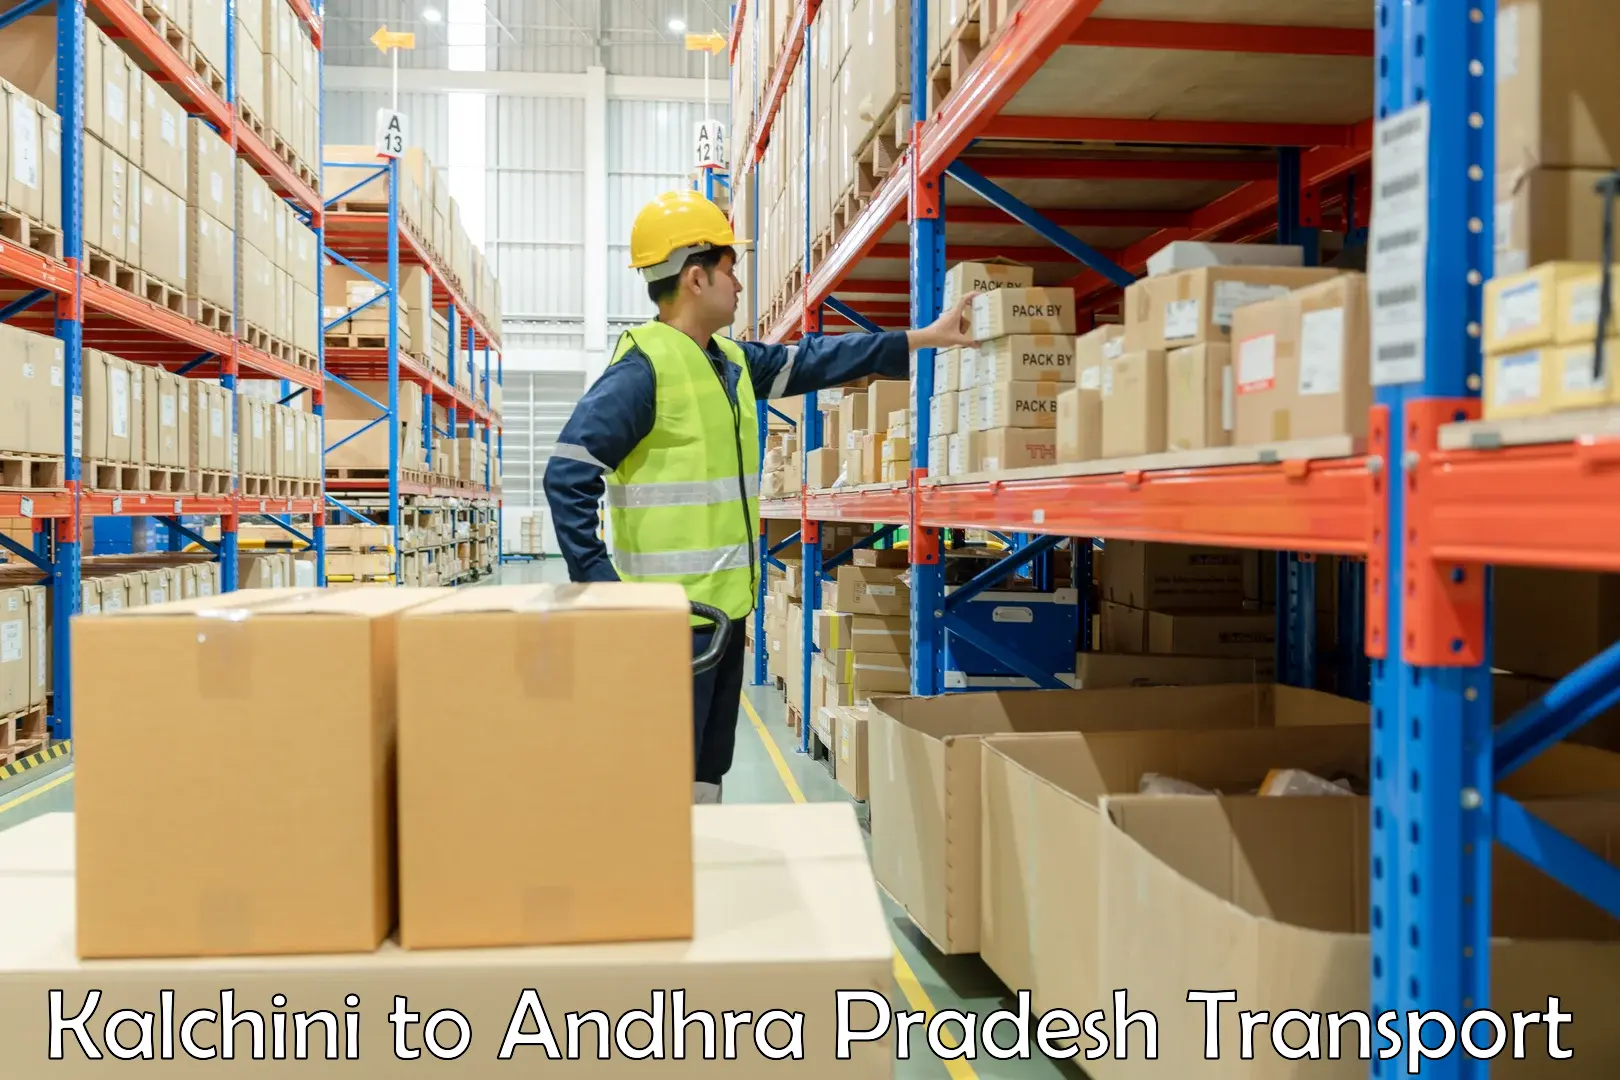 Truck transport companies in India Kalchini to Yellamanchili